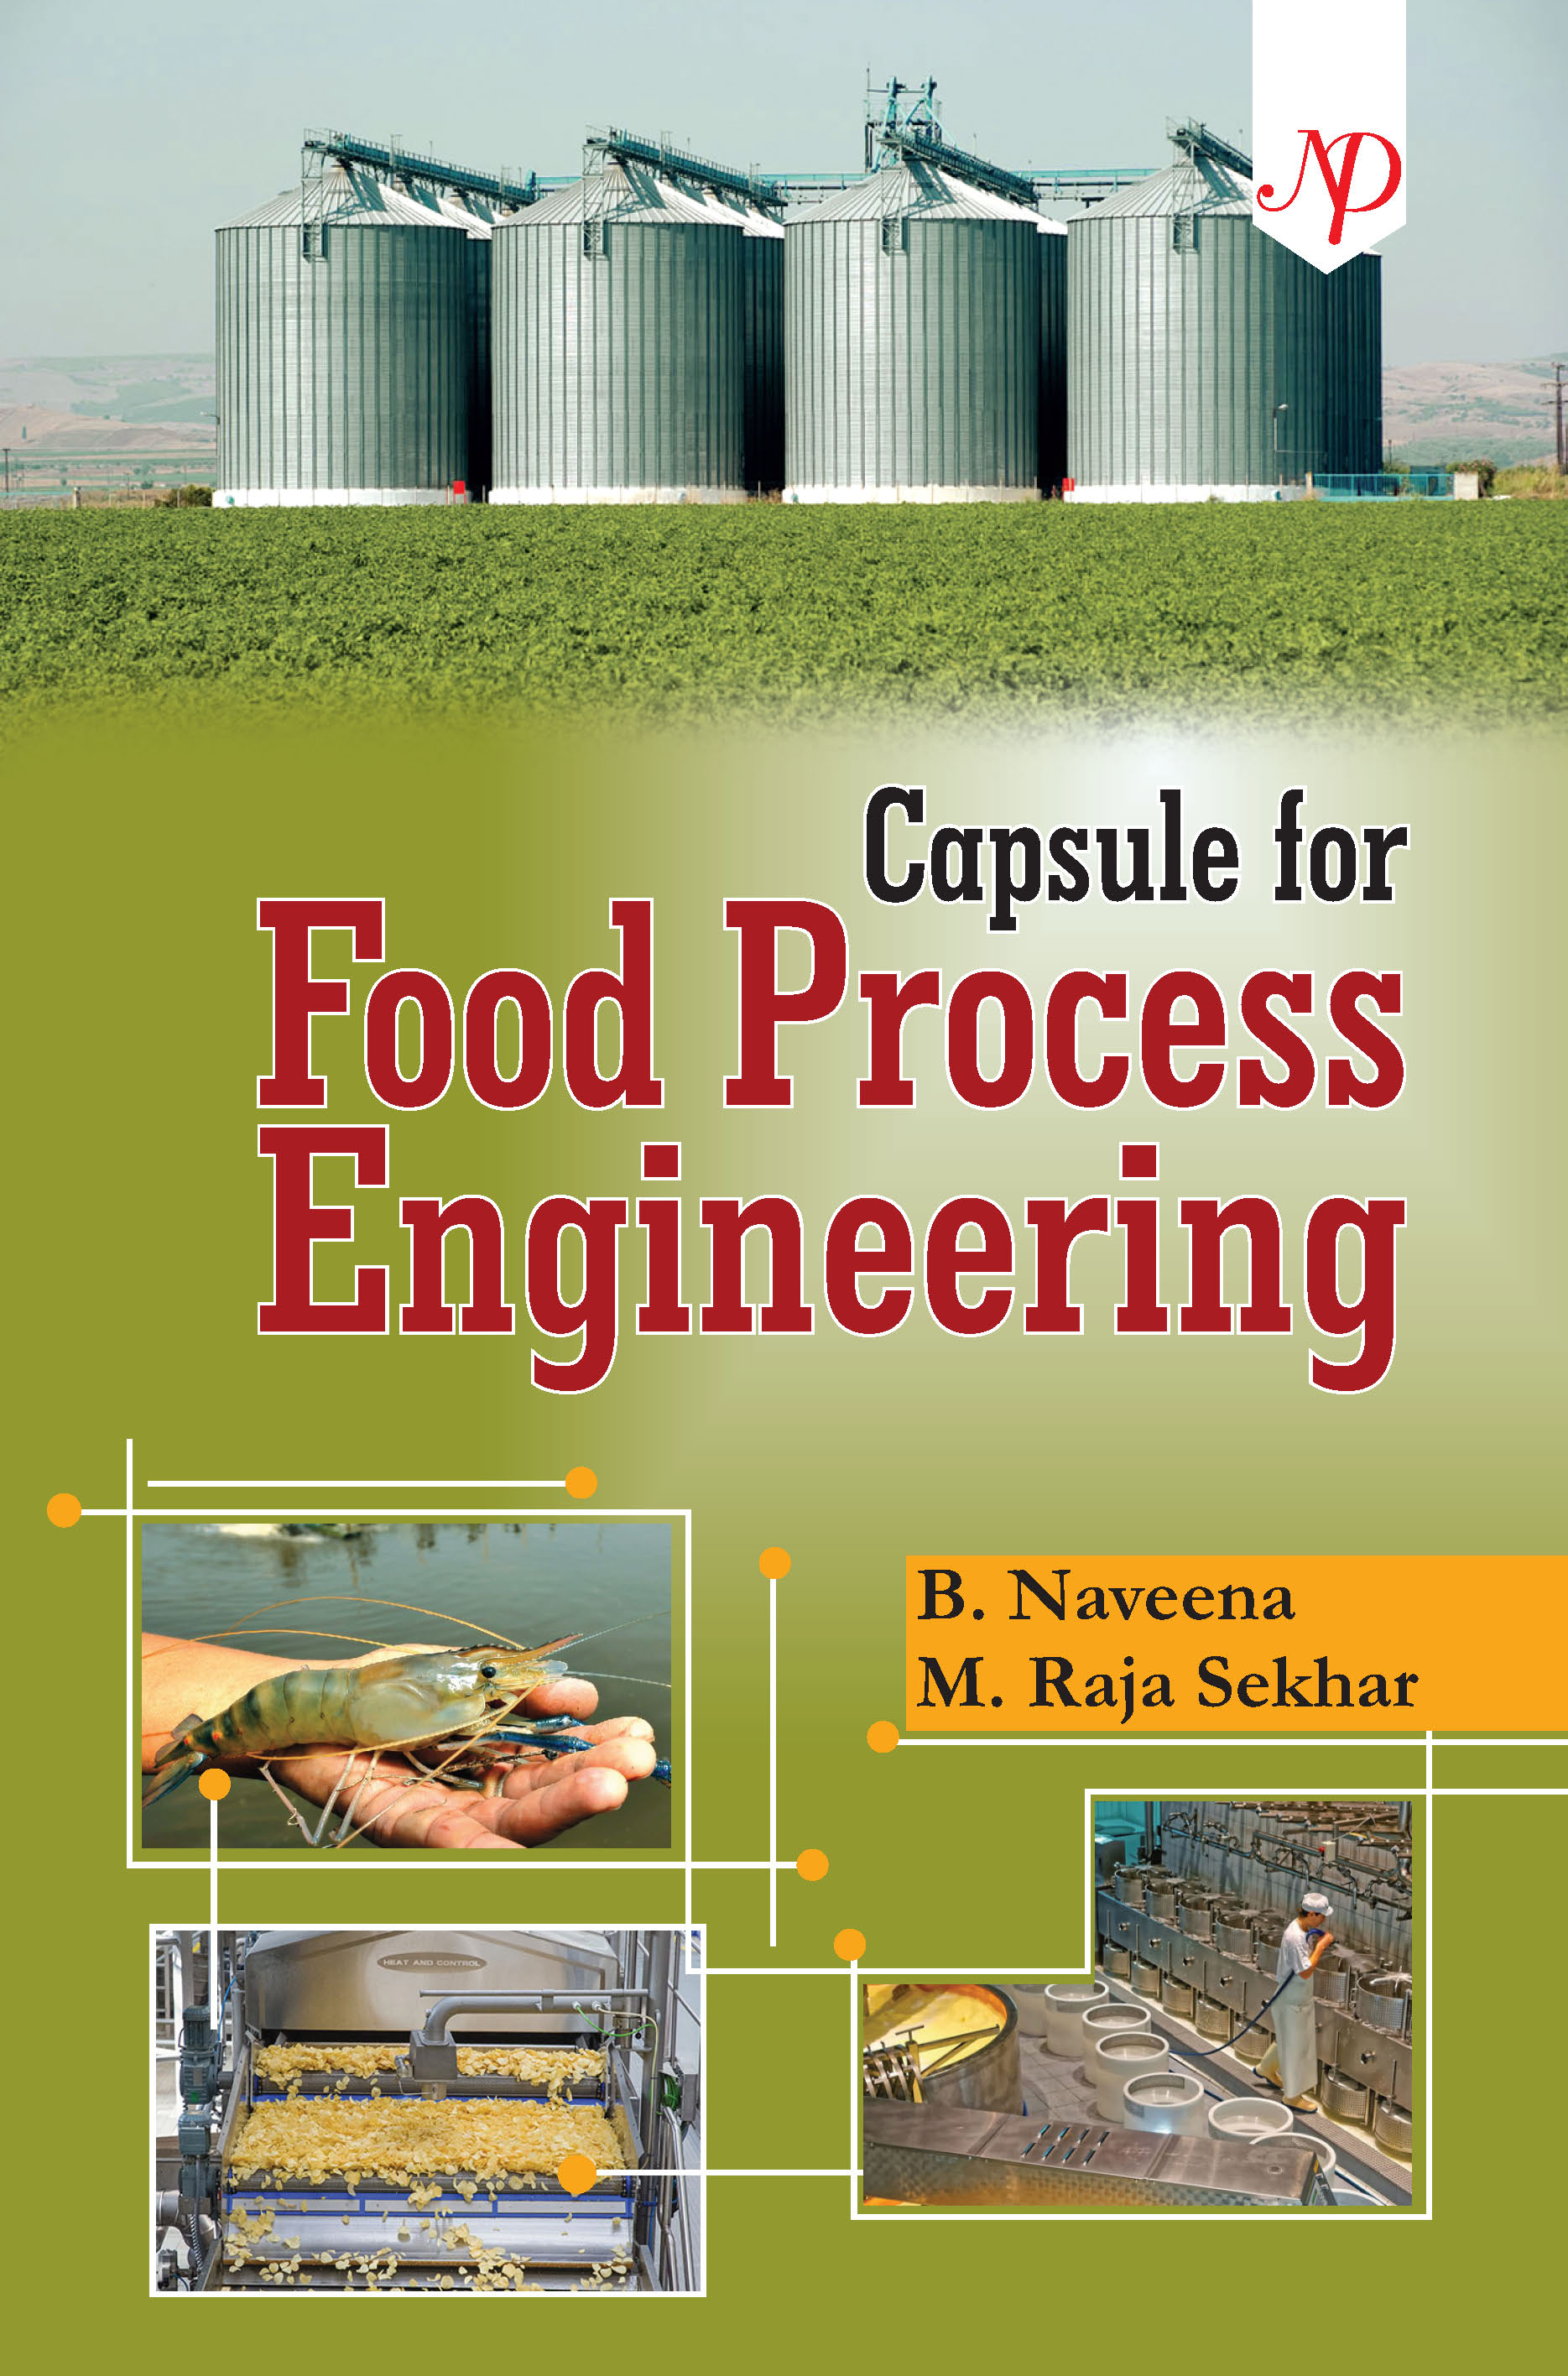 Capsule for Food Process Engineering Cover.jpg